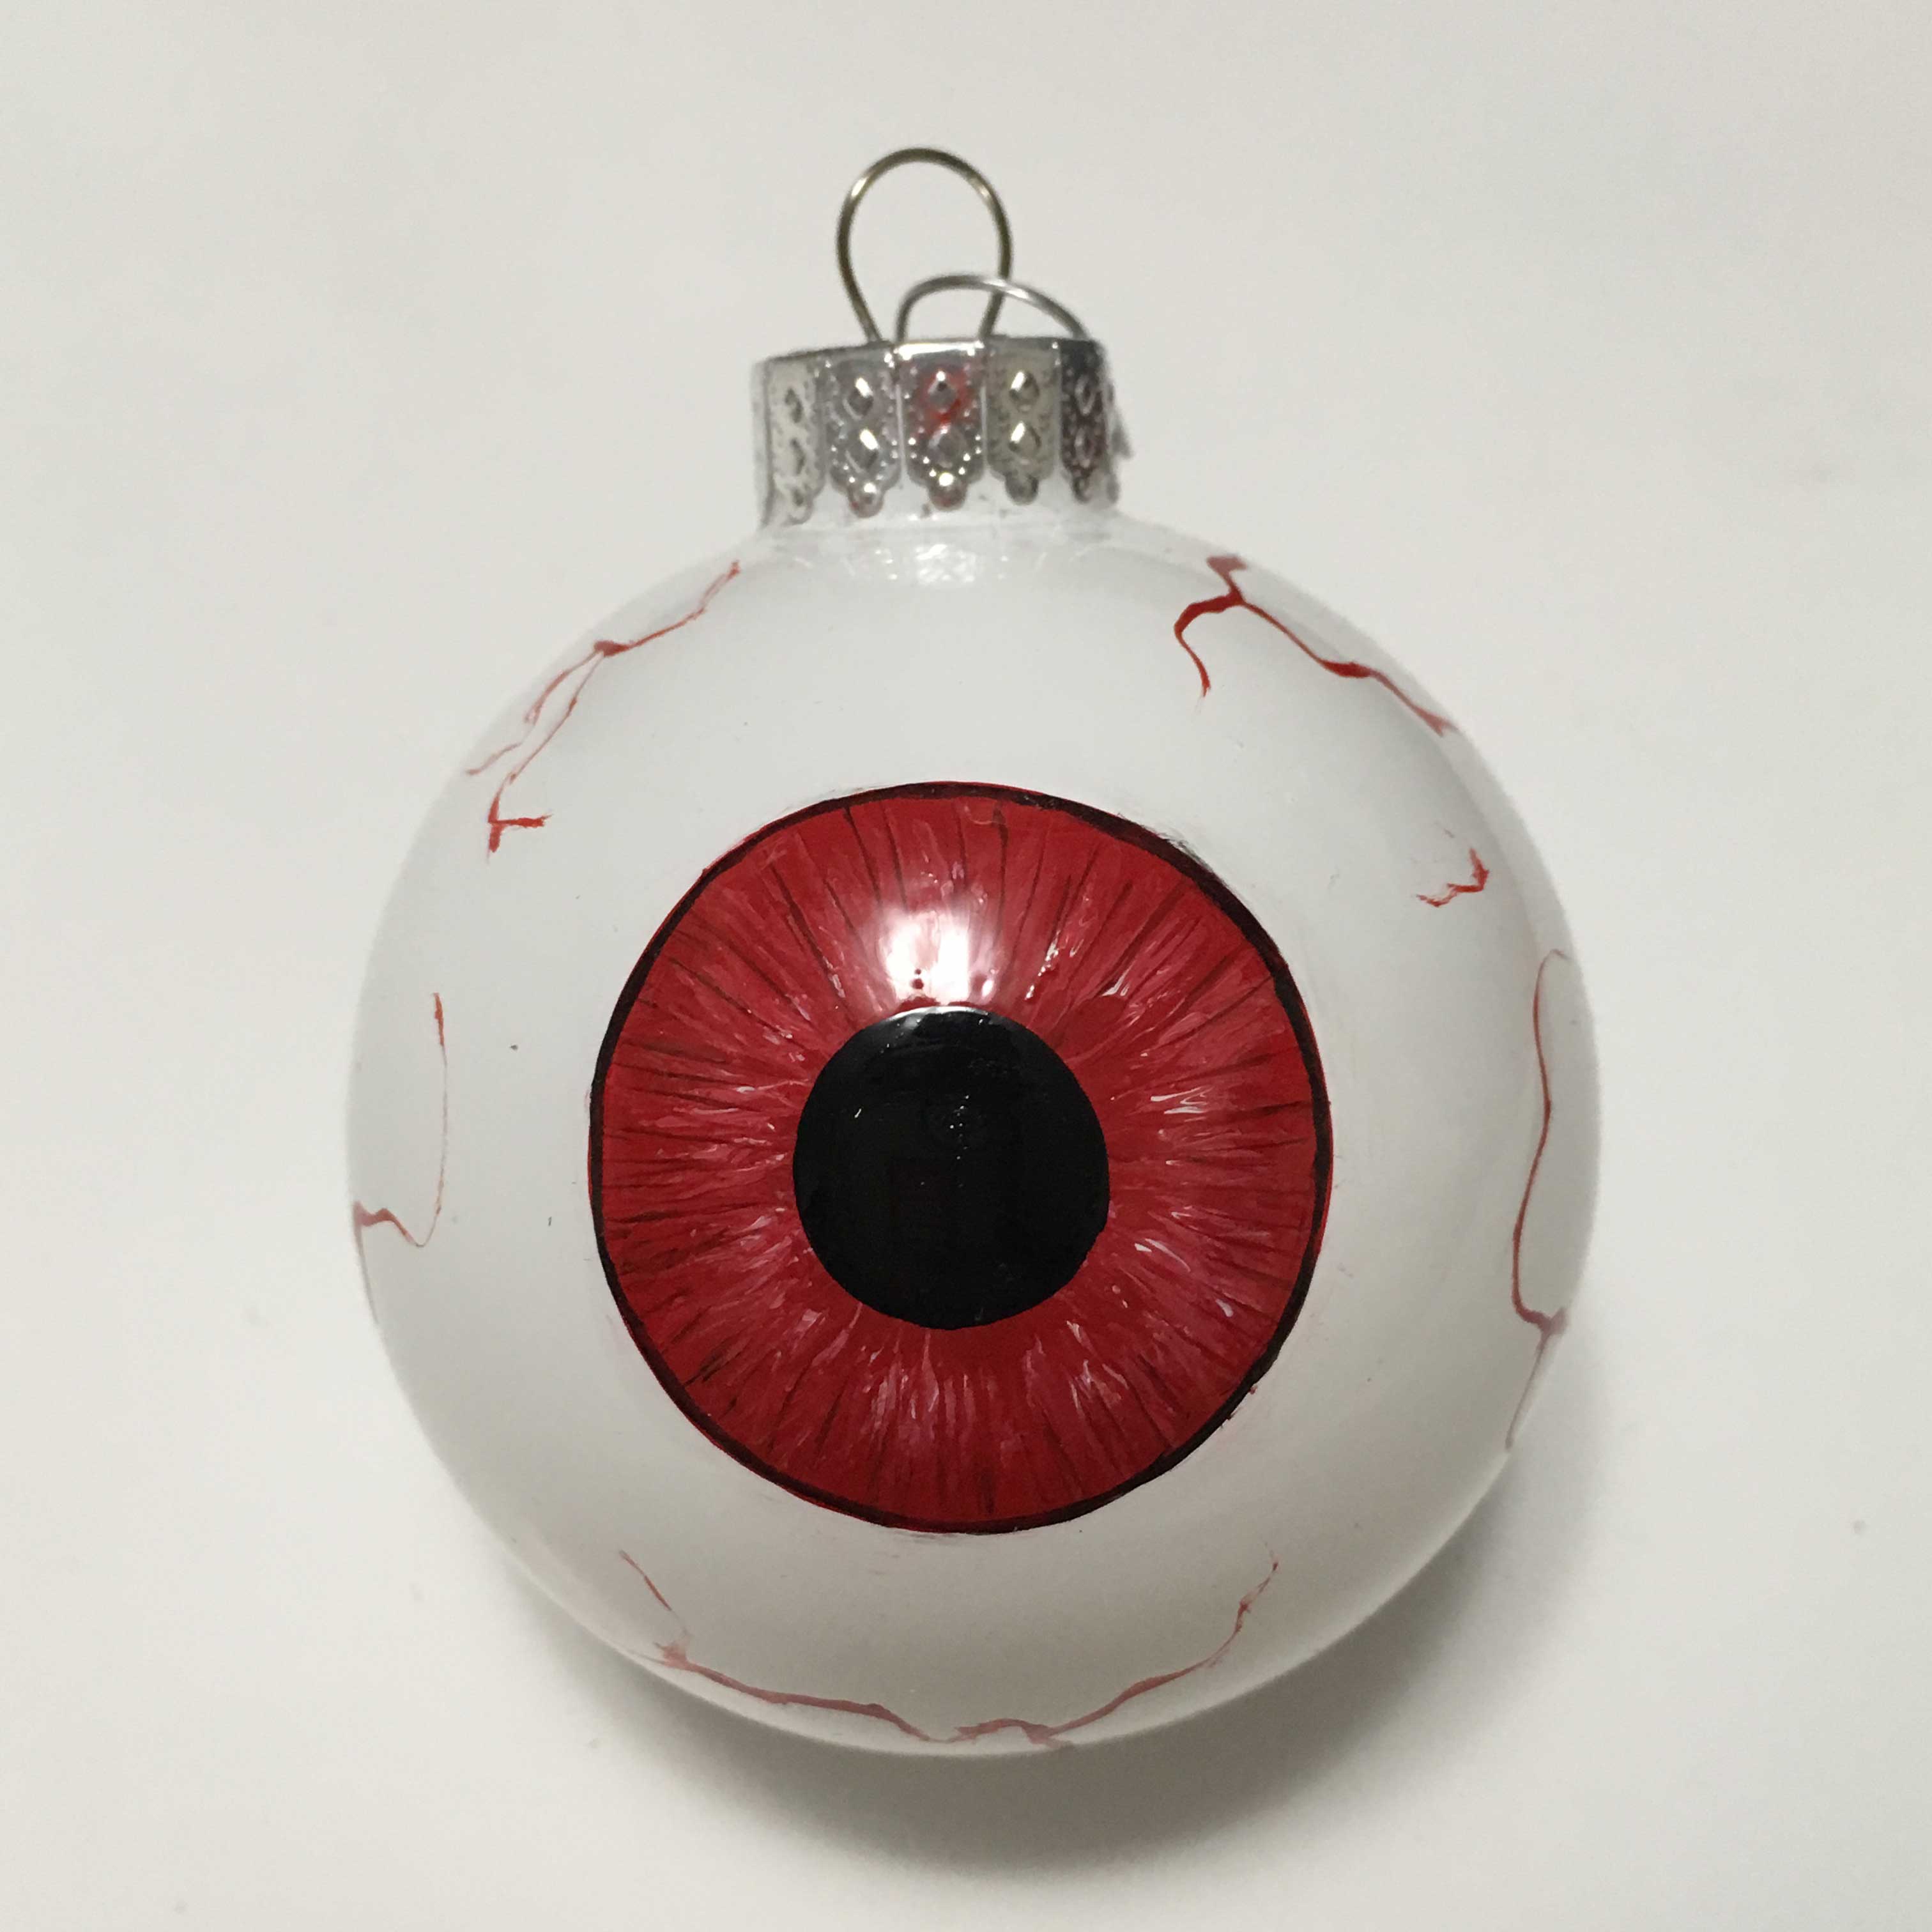   red iris eyeball eye ornament